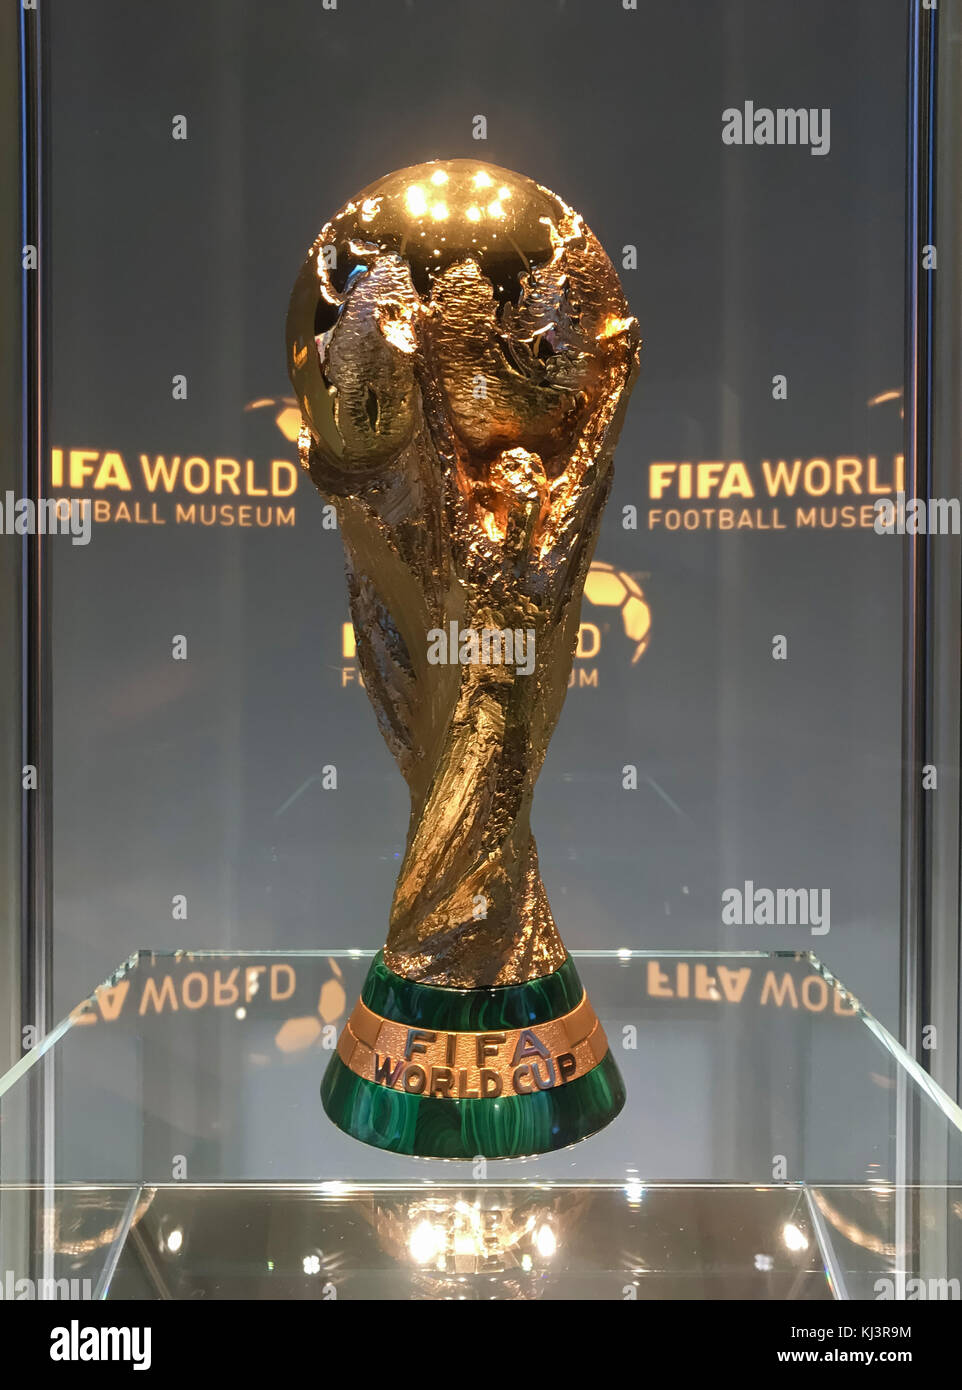 Zurich, Switzerland - 12 Nov 2017: The FIFA World Cup trophy, exhibited at the FIFA World football museum in Zurich, Switzerland. Stock Photo